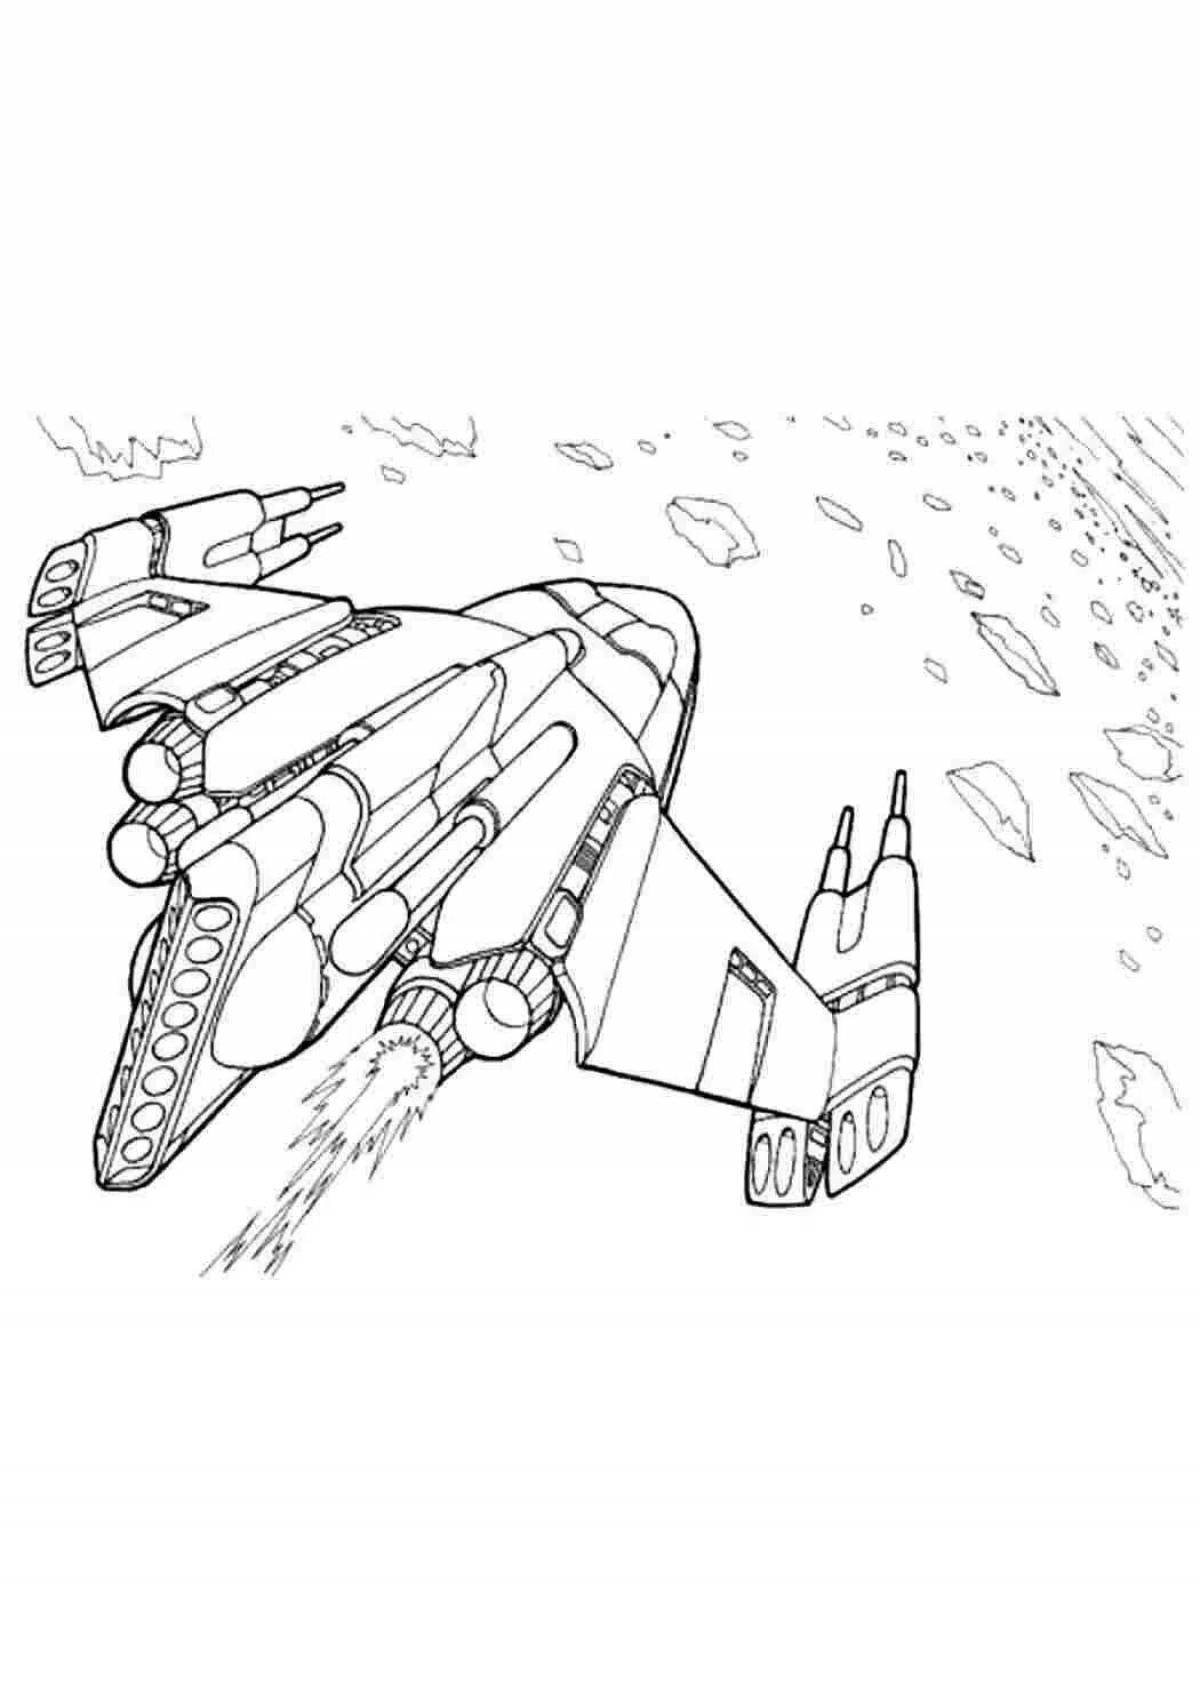 Fun space wars coloring book